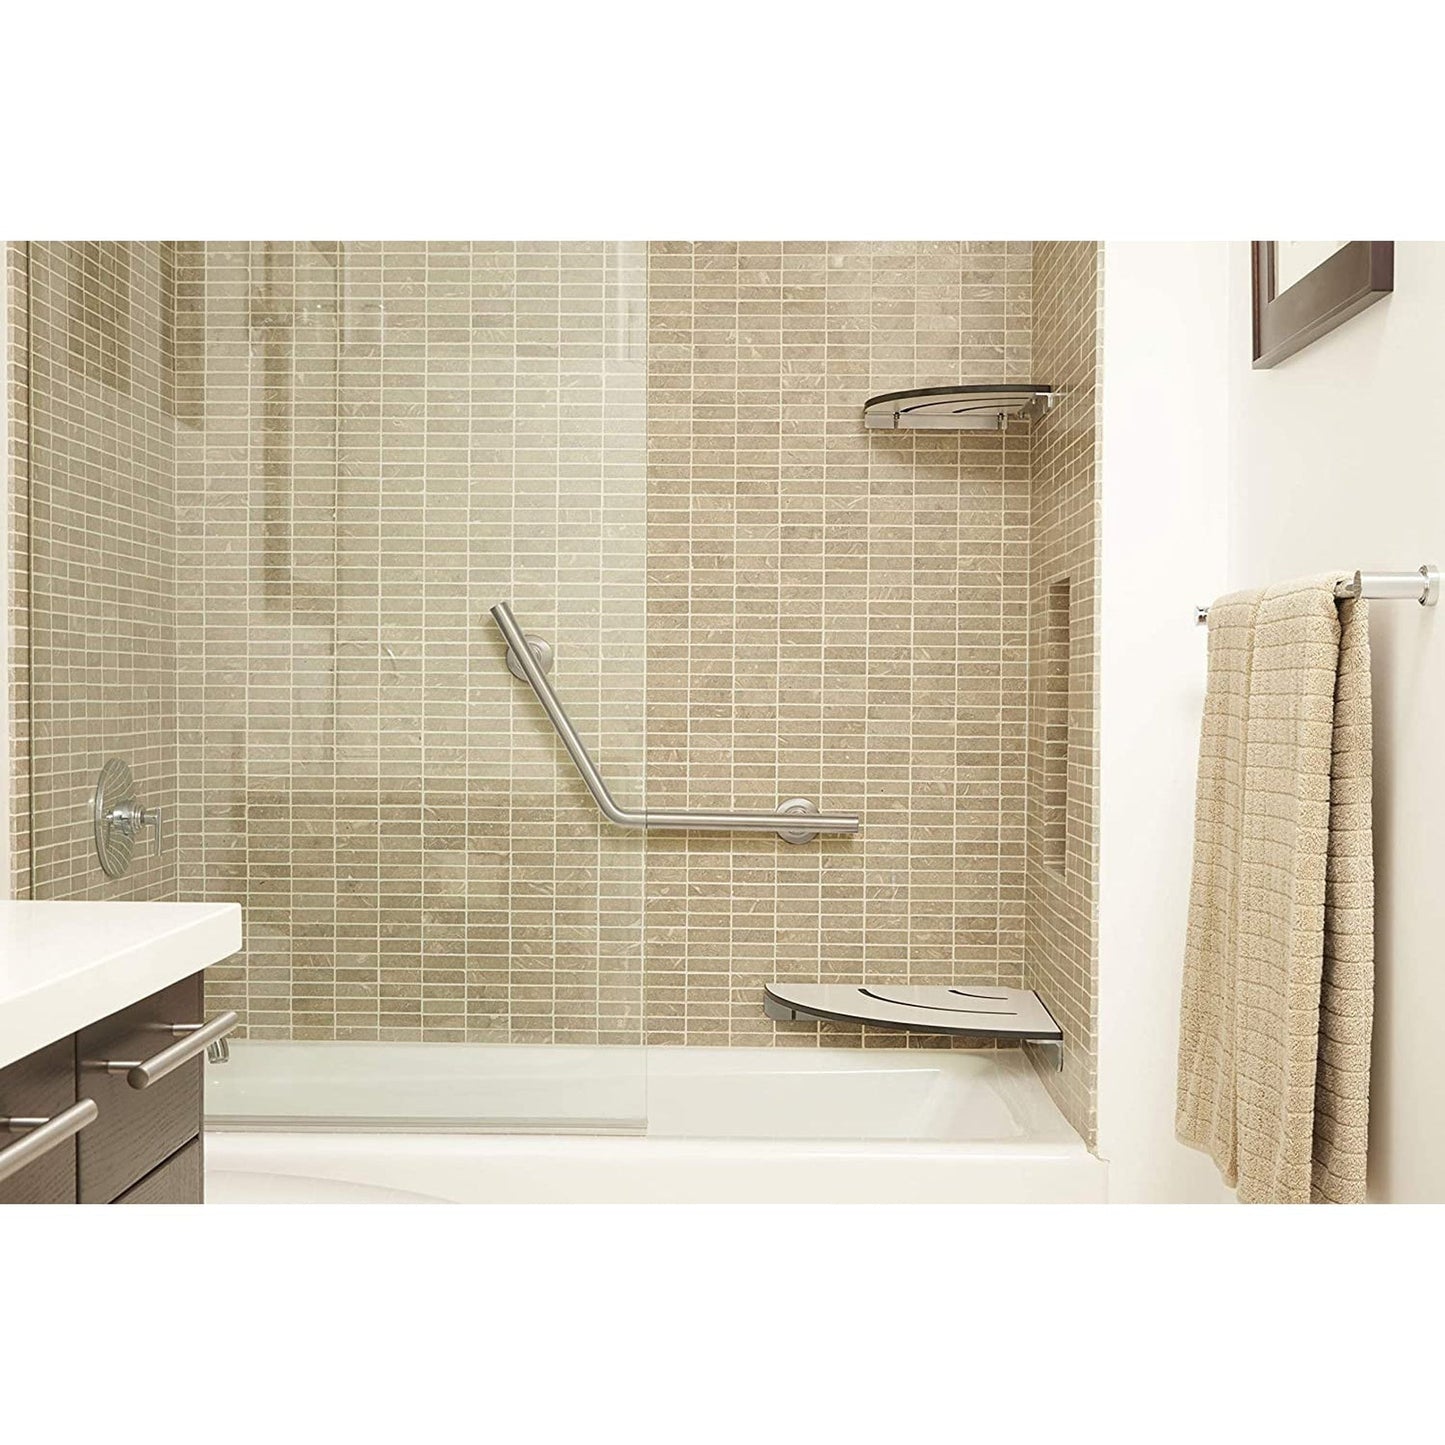 Seachrome Lifestyle and Wellness 12" x 9" Contour Shower Shelf, One-Piece Solid Phenolic Light Gray Stainless Finish